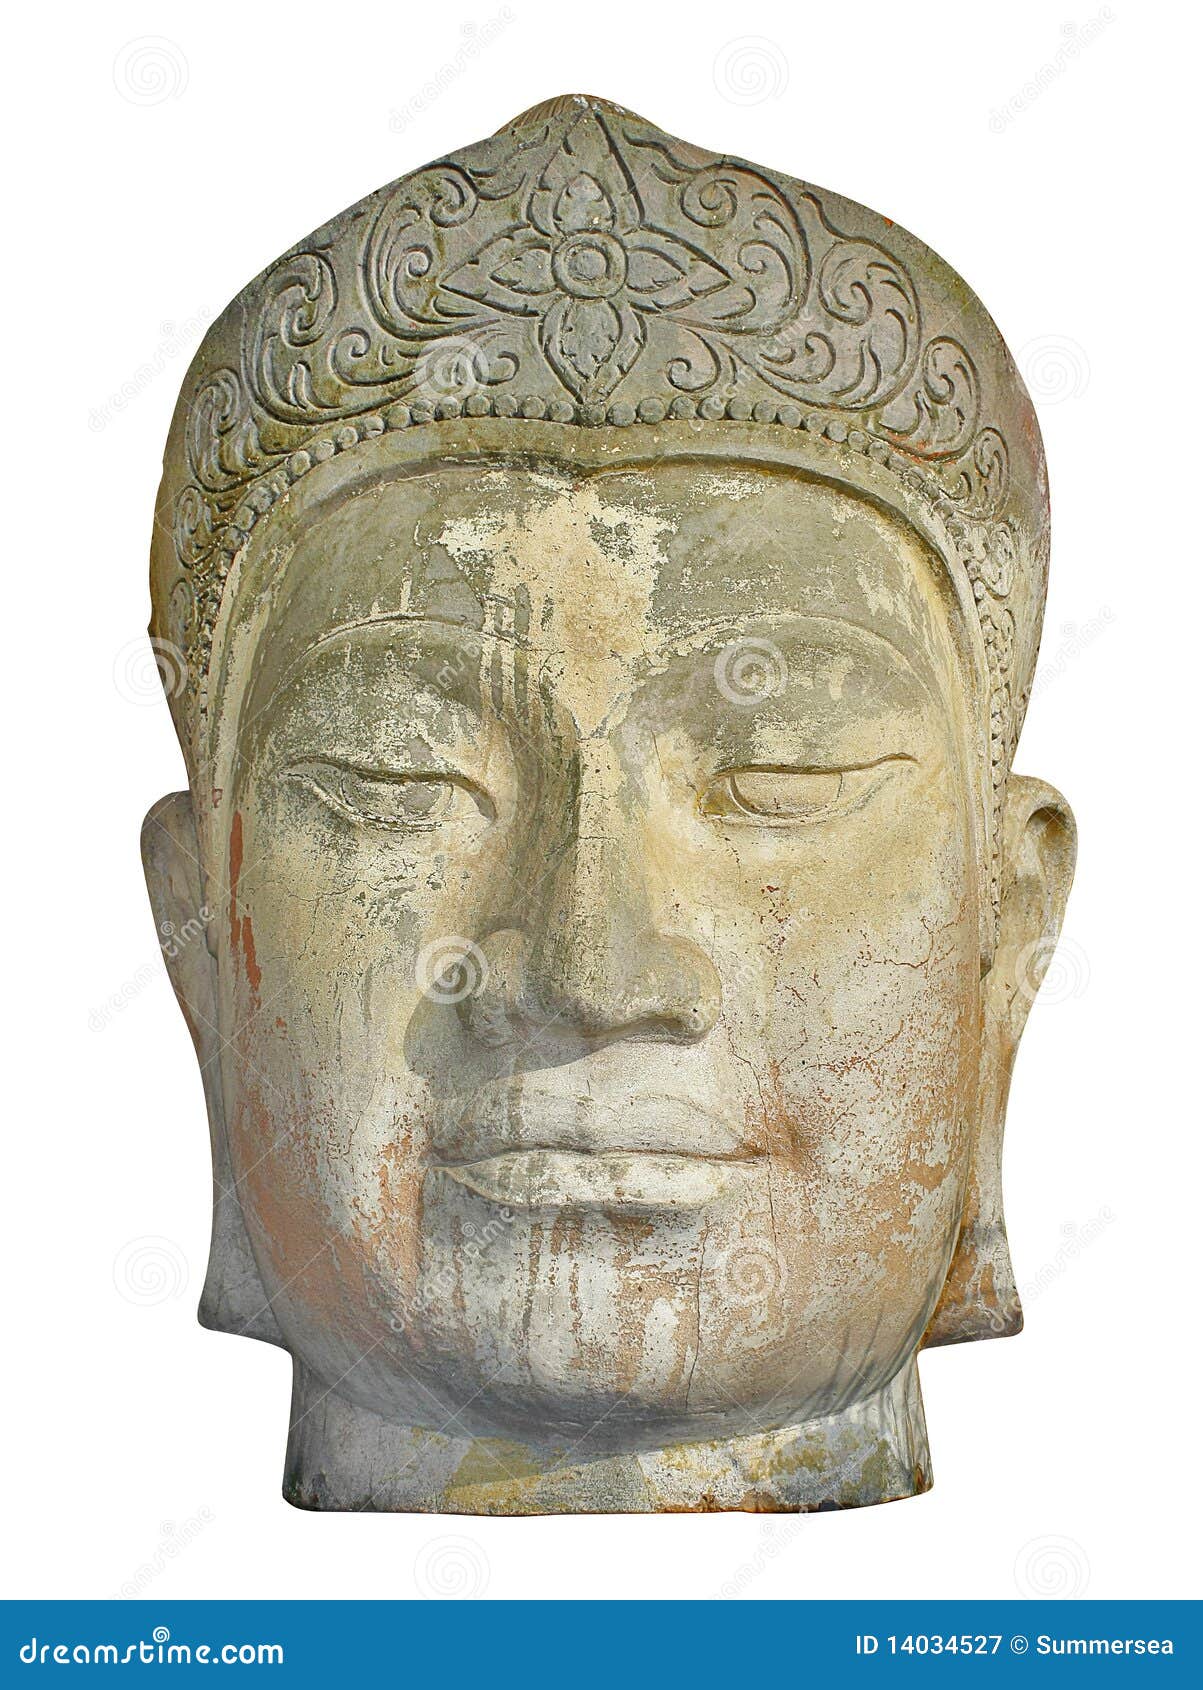 ancient weather worn stone head artifact